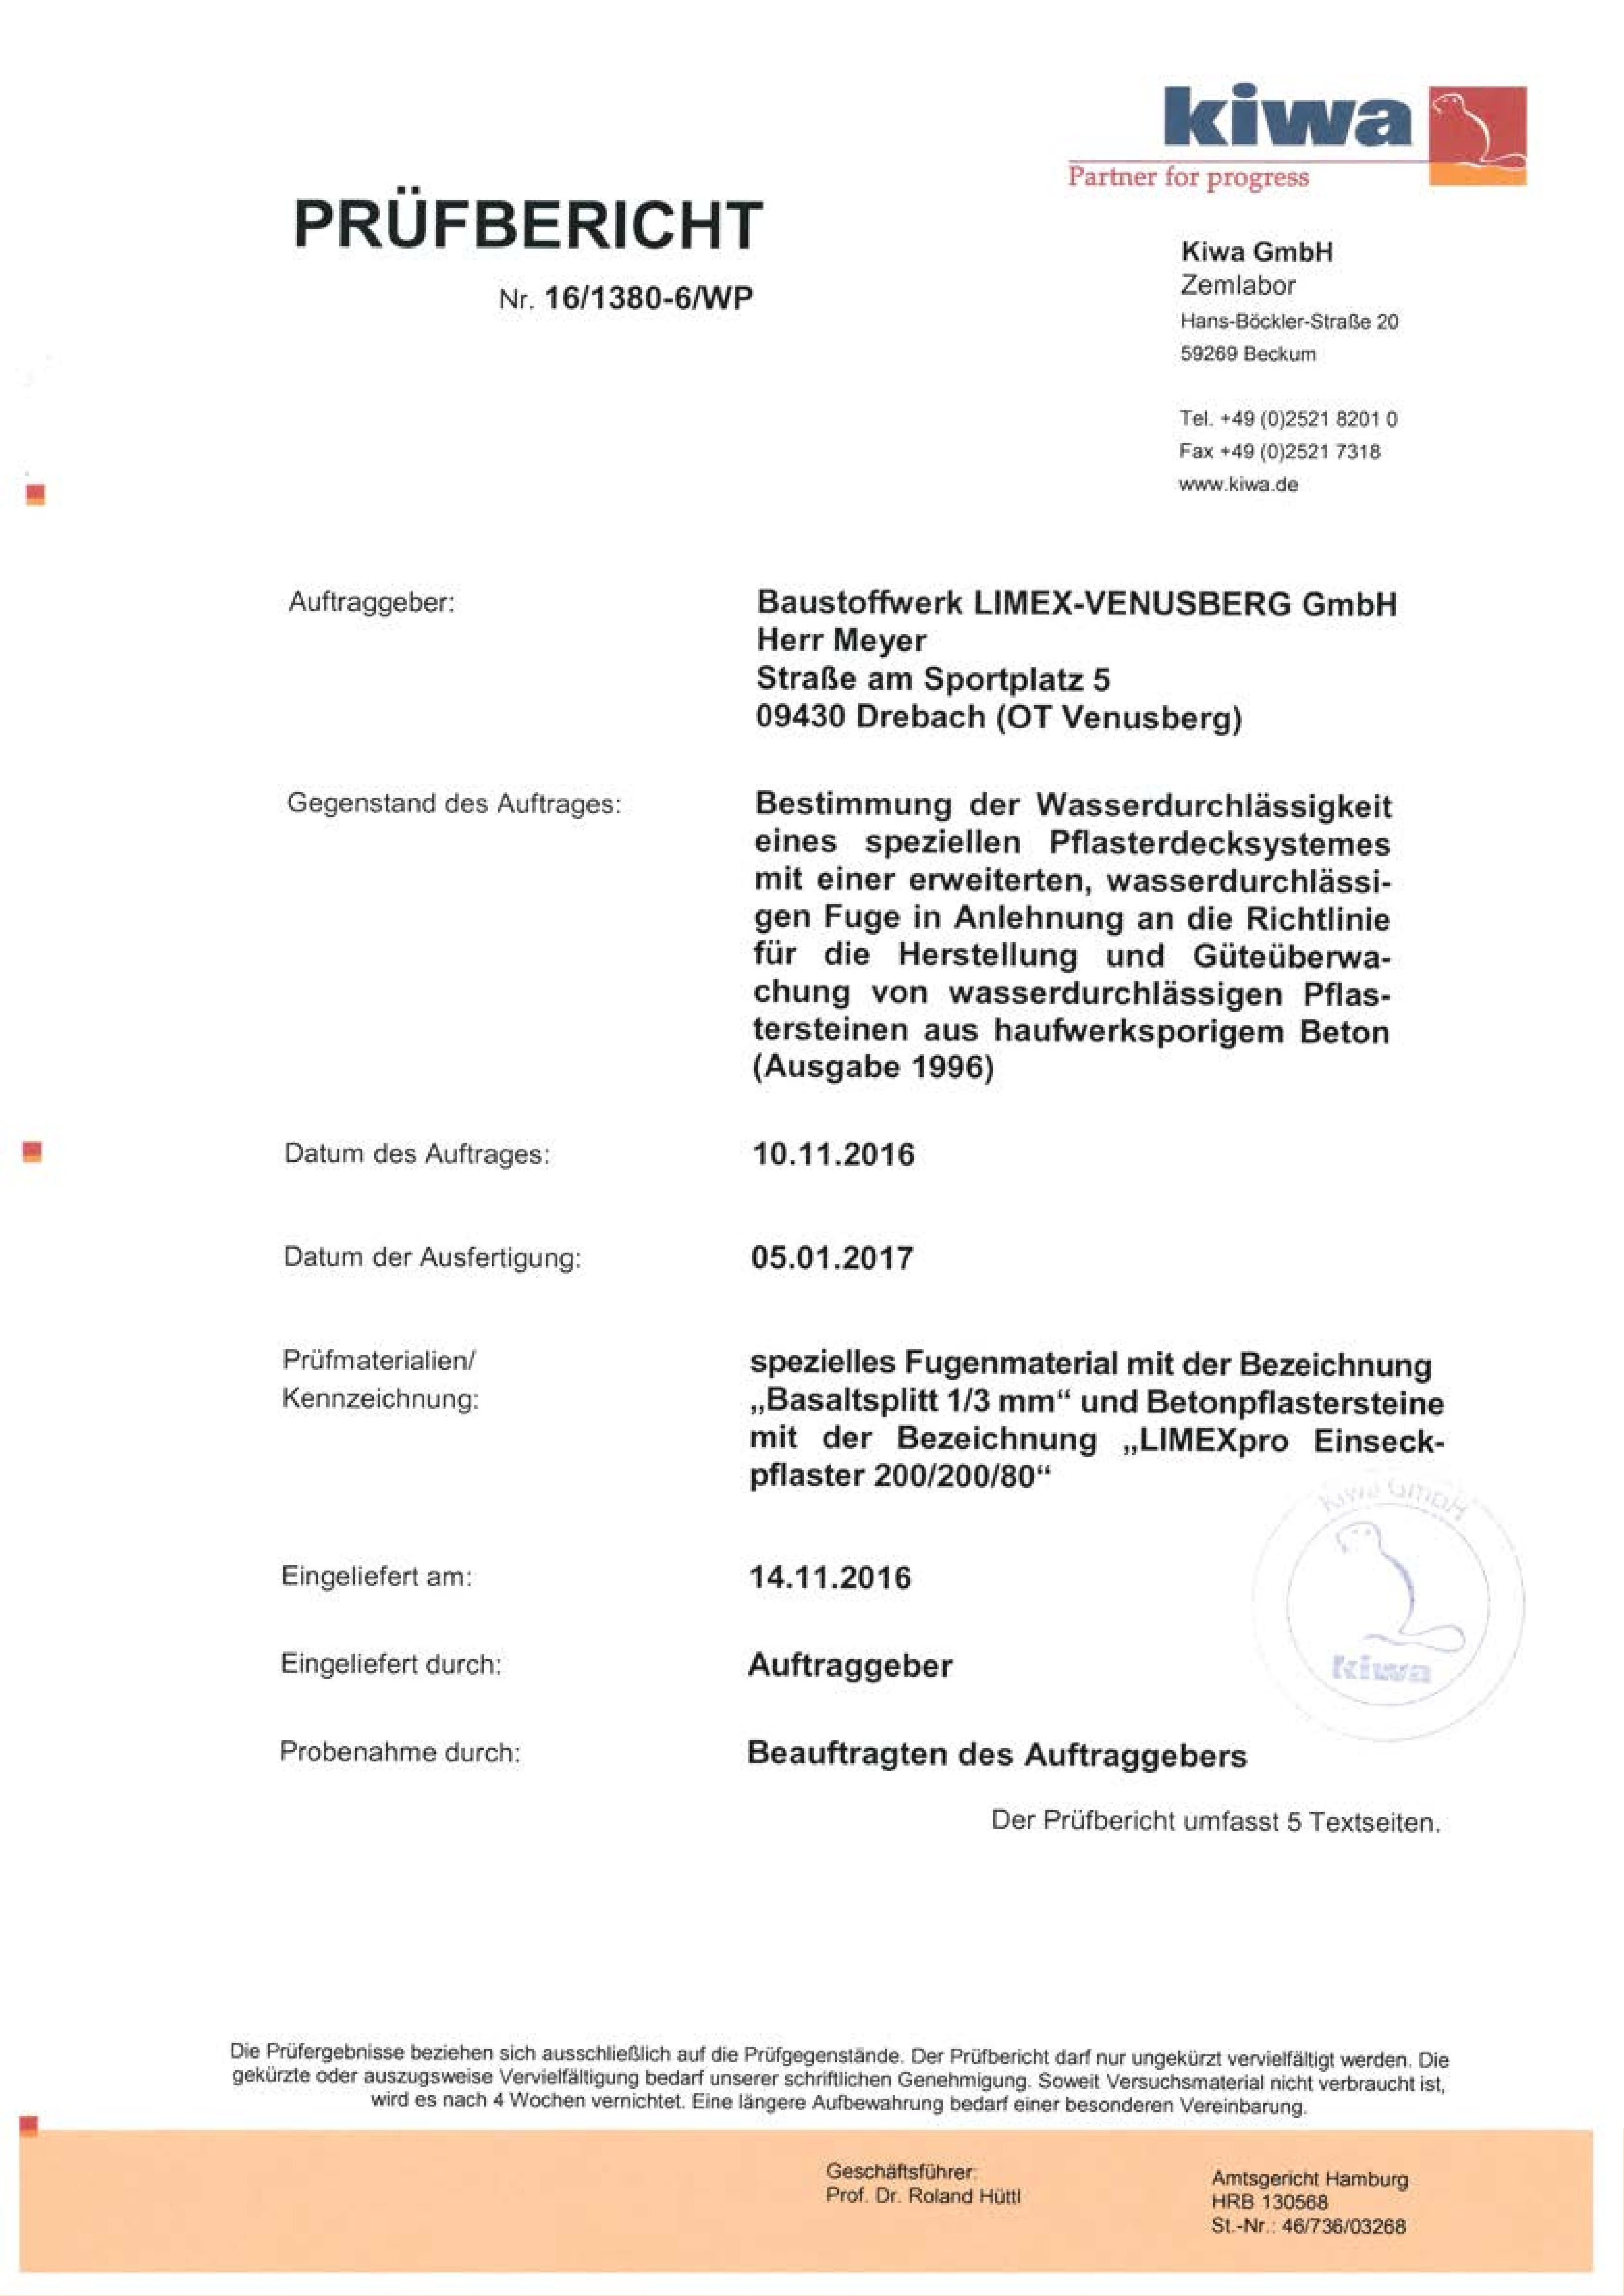 LIMEX Infocenter Pruefzeugnis 16 1380 6 WP LIMEXpro Eins Eck Pflaster pdf